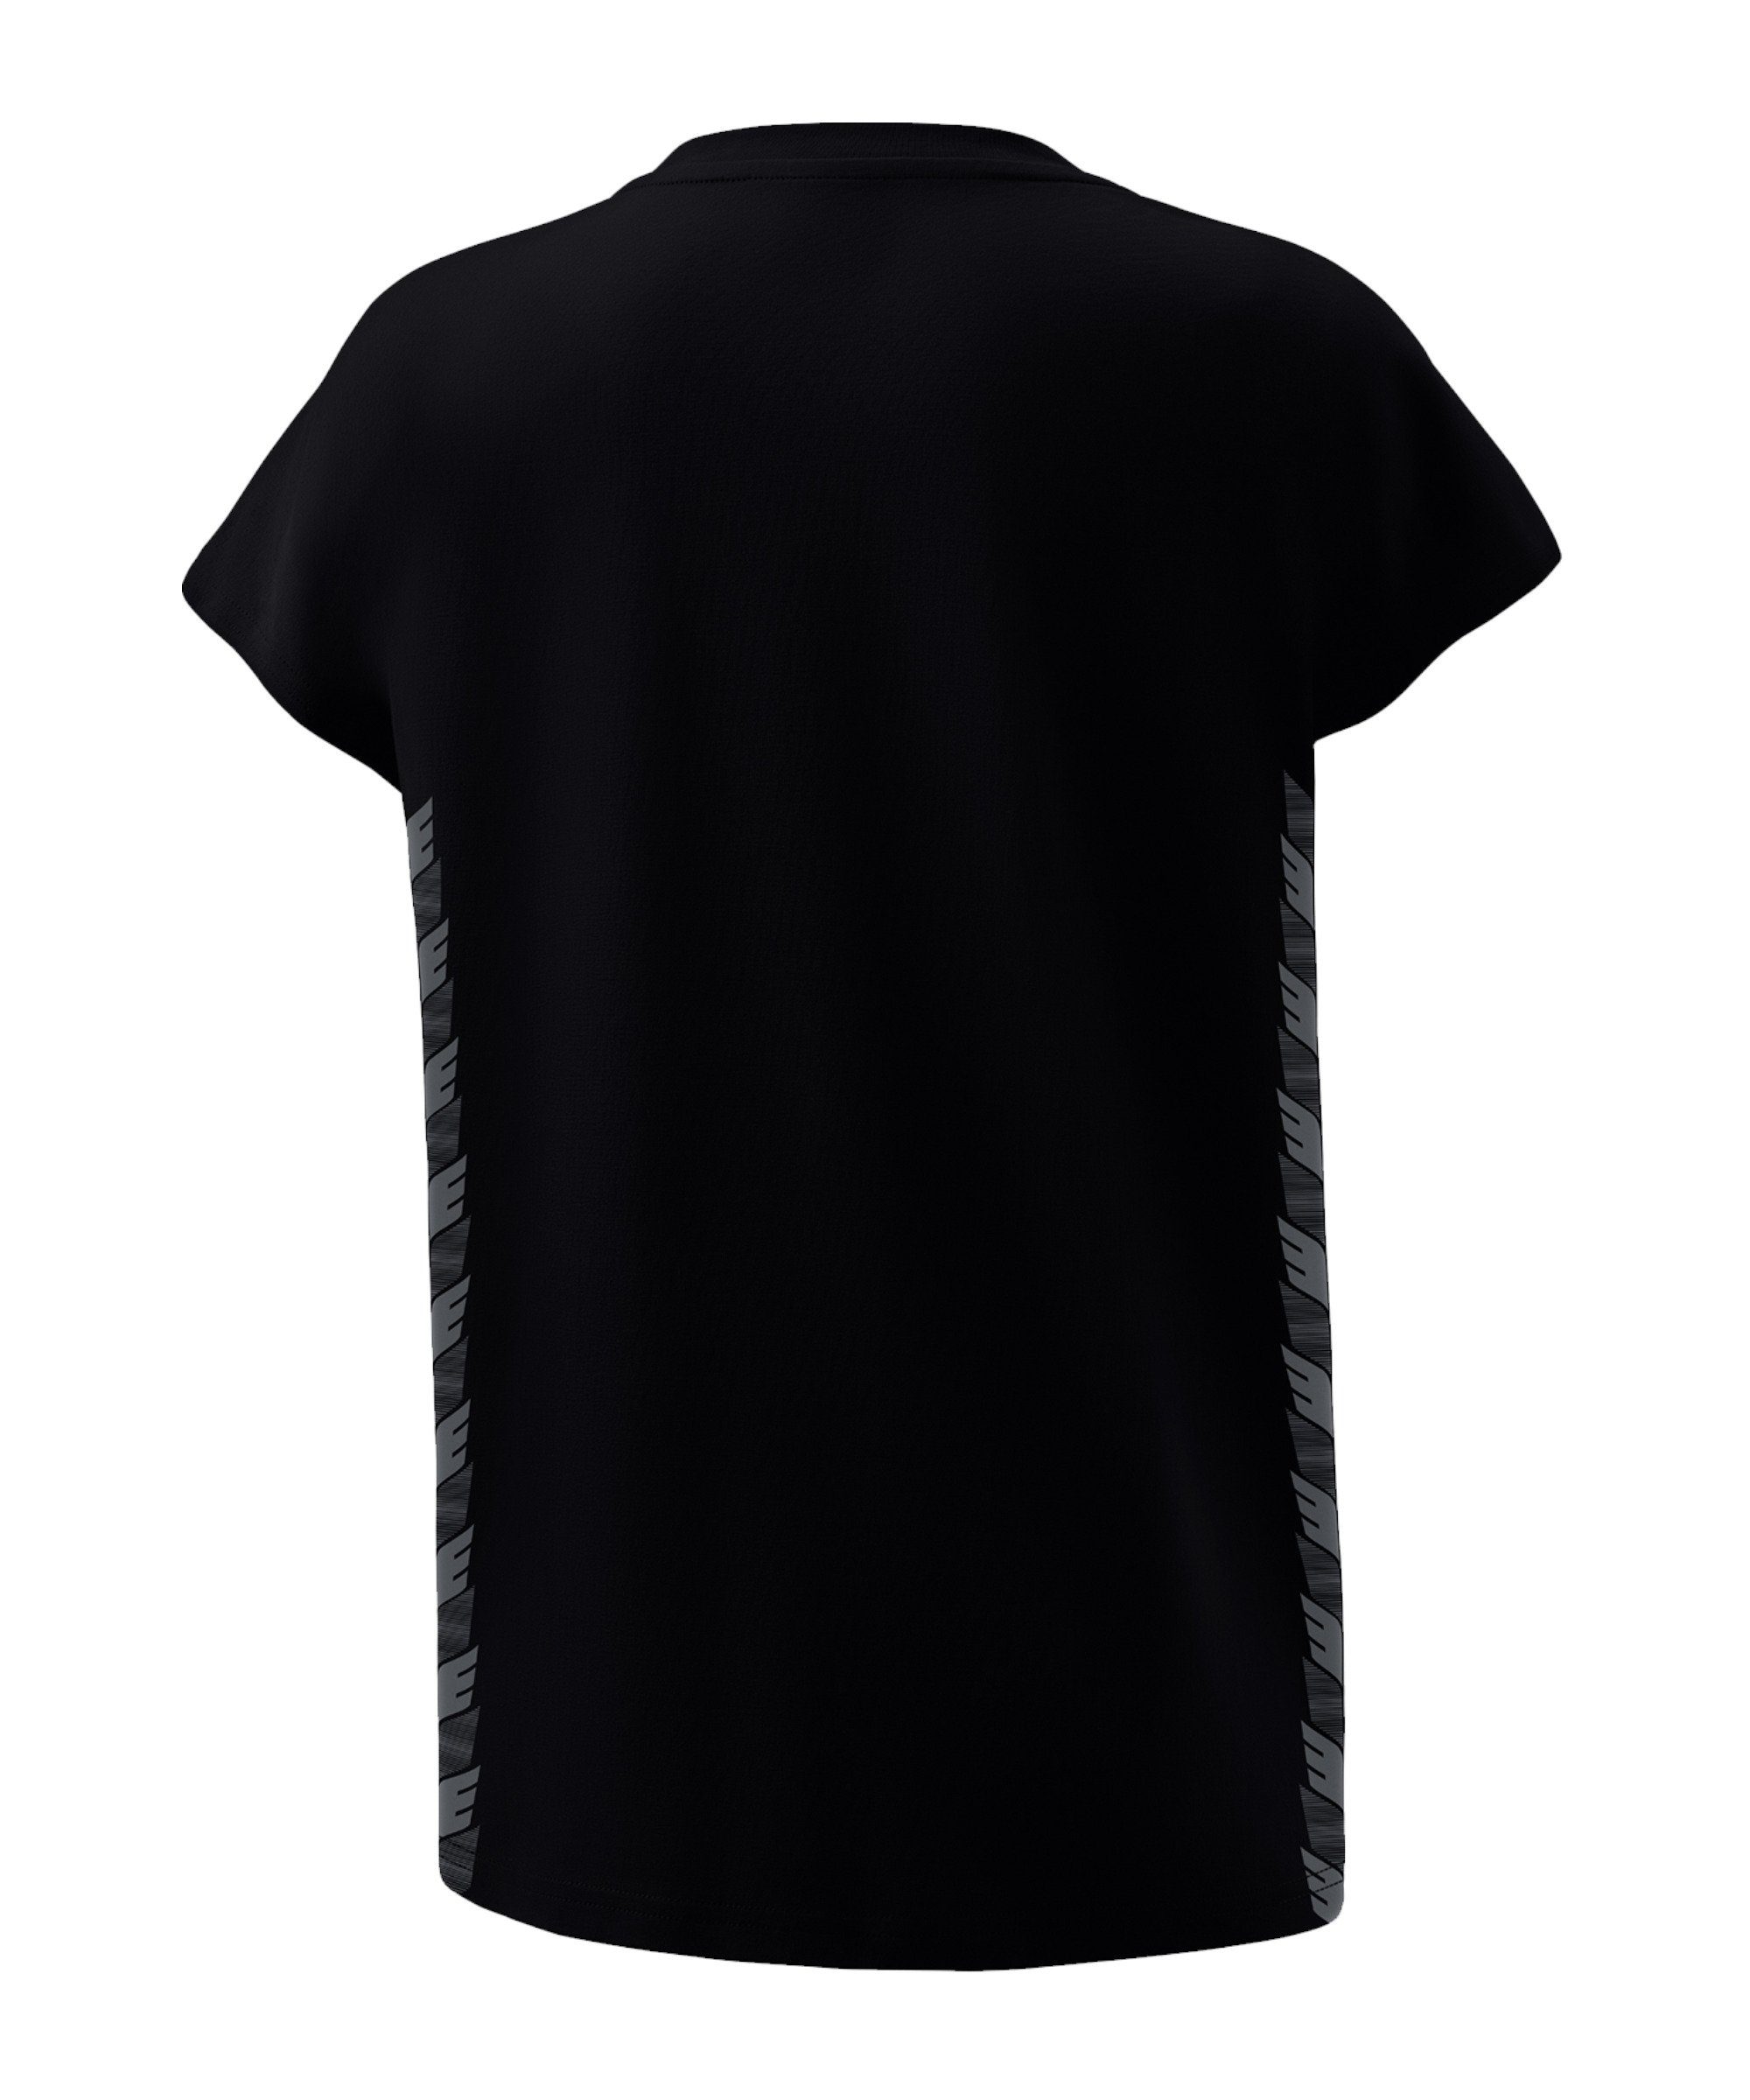 Erima T-Shirt Team Essential T-Shirt schwarz Damen default